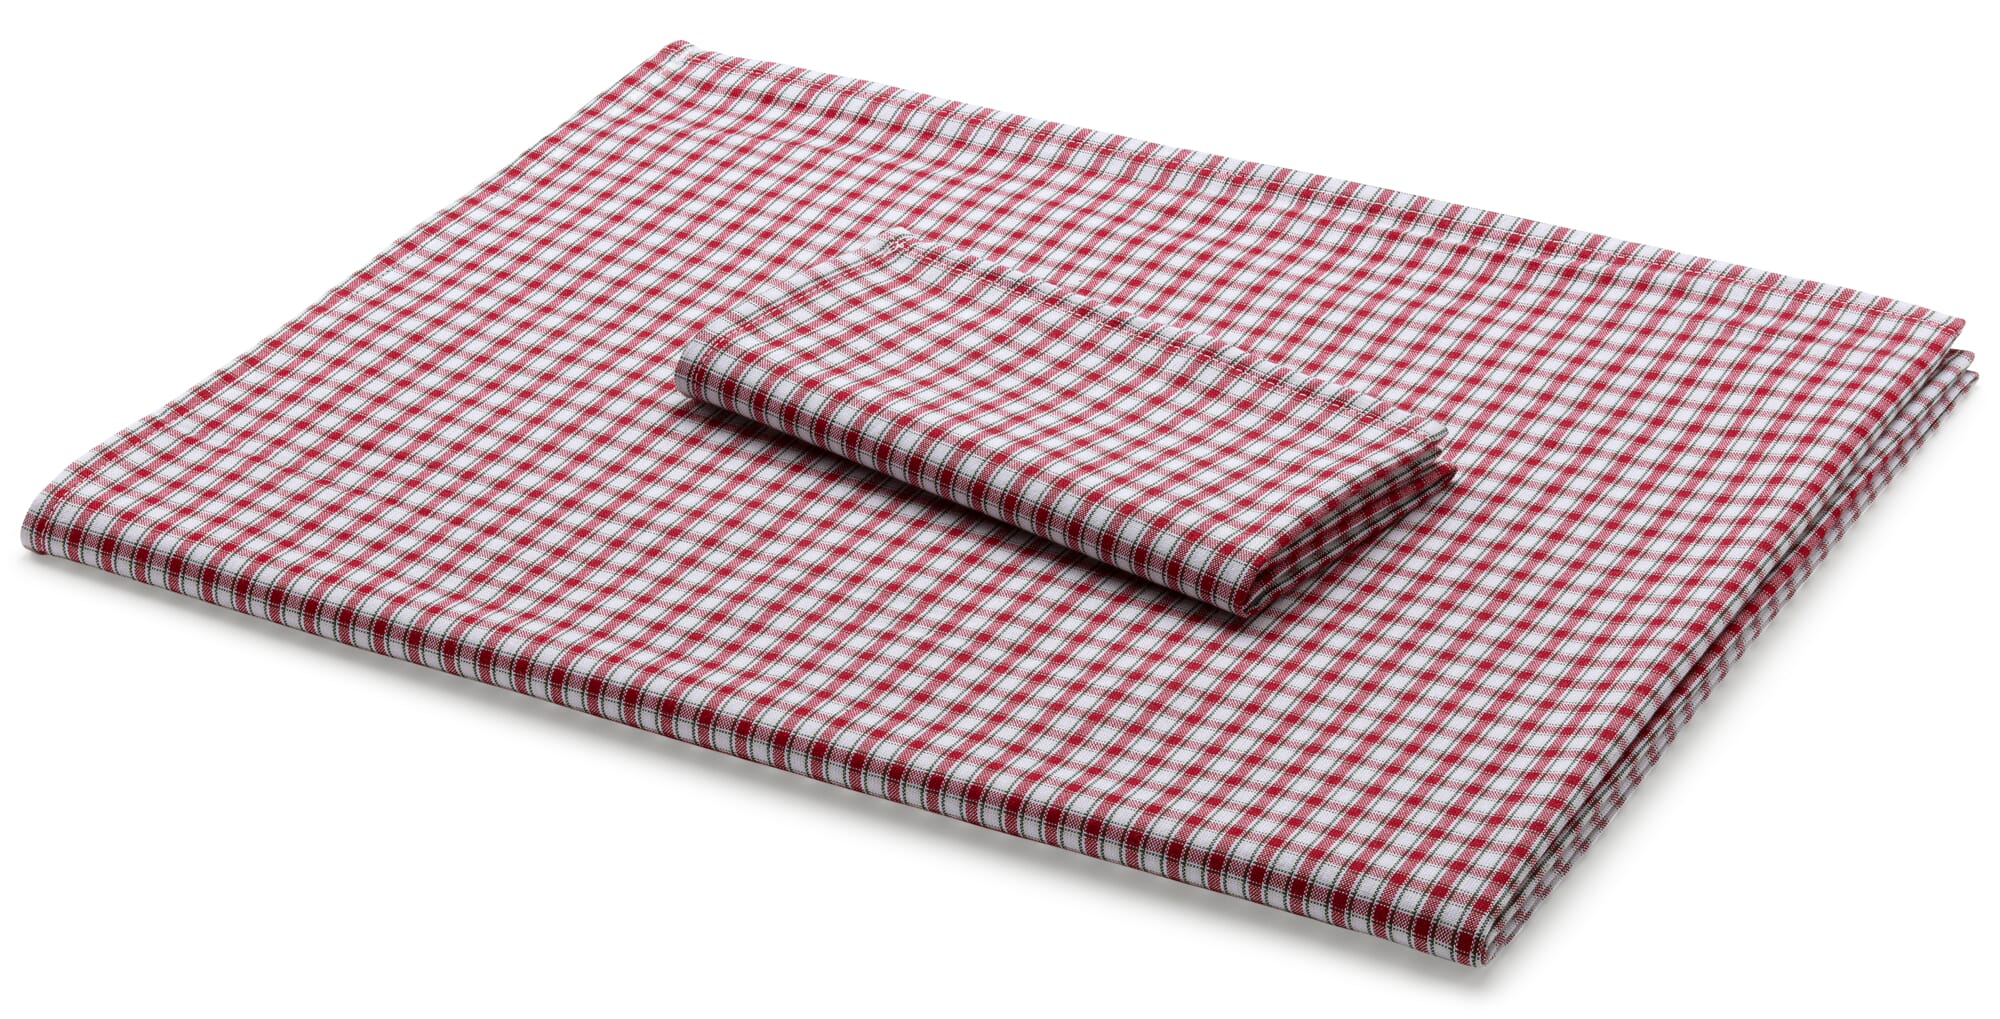 https://assets.manufactum.de/p/210/210462/210462_04.jpg/napkin-red-white-checkered.jpg